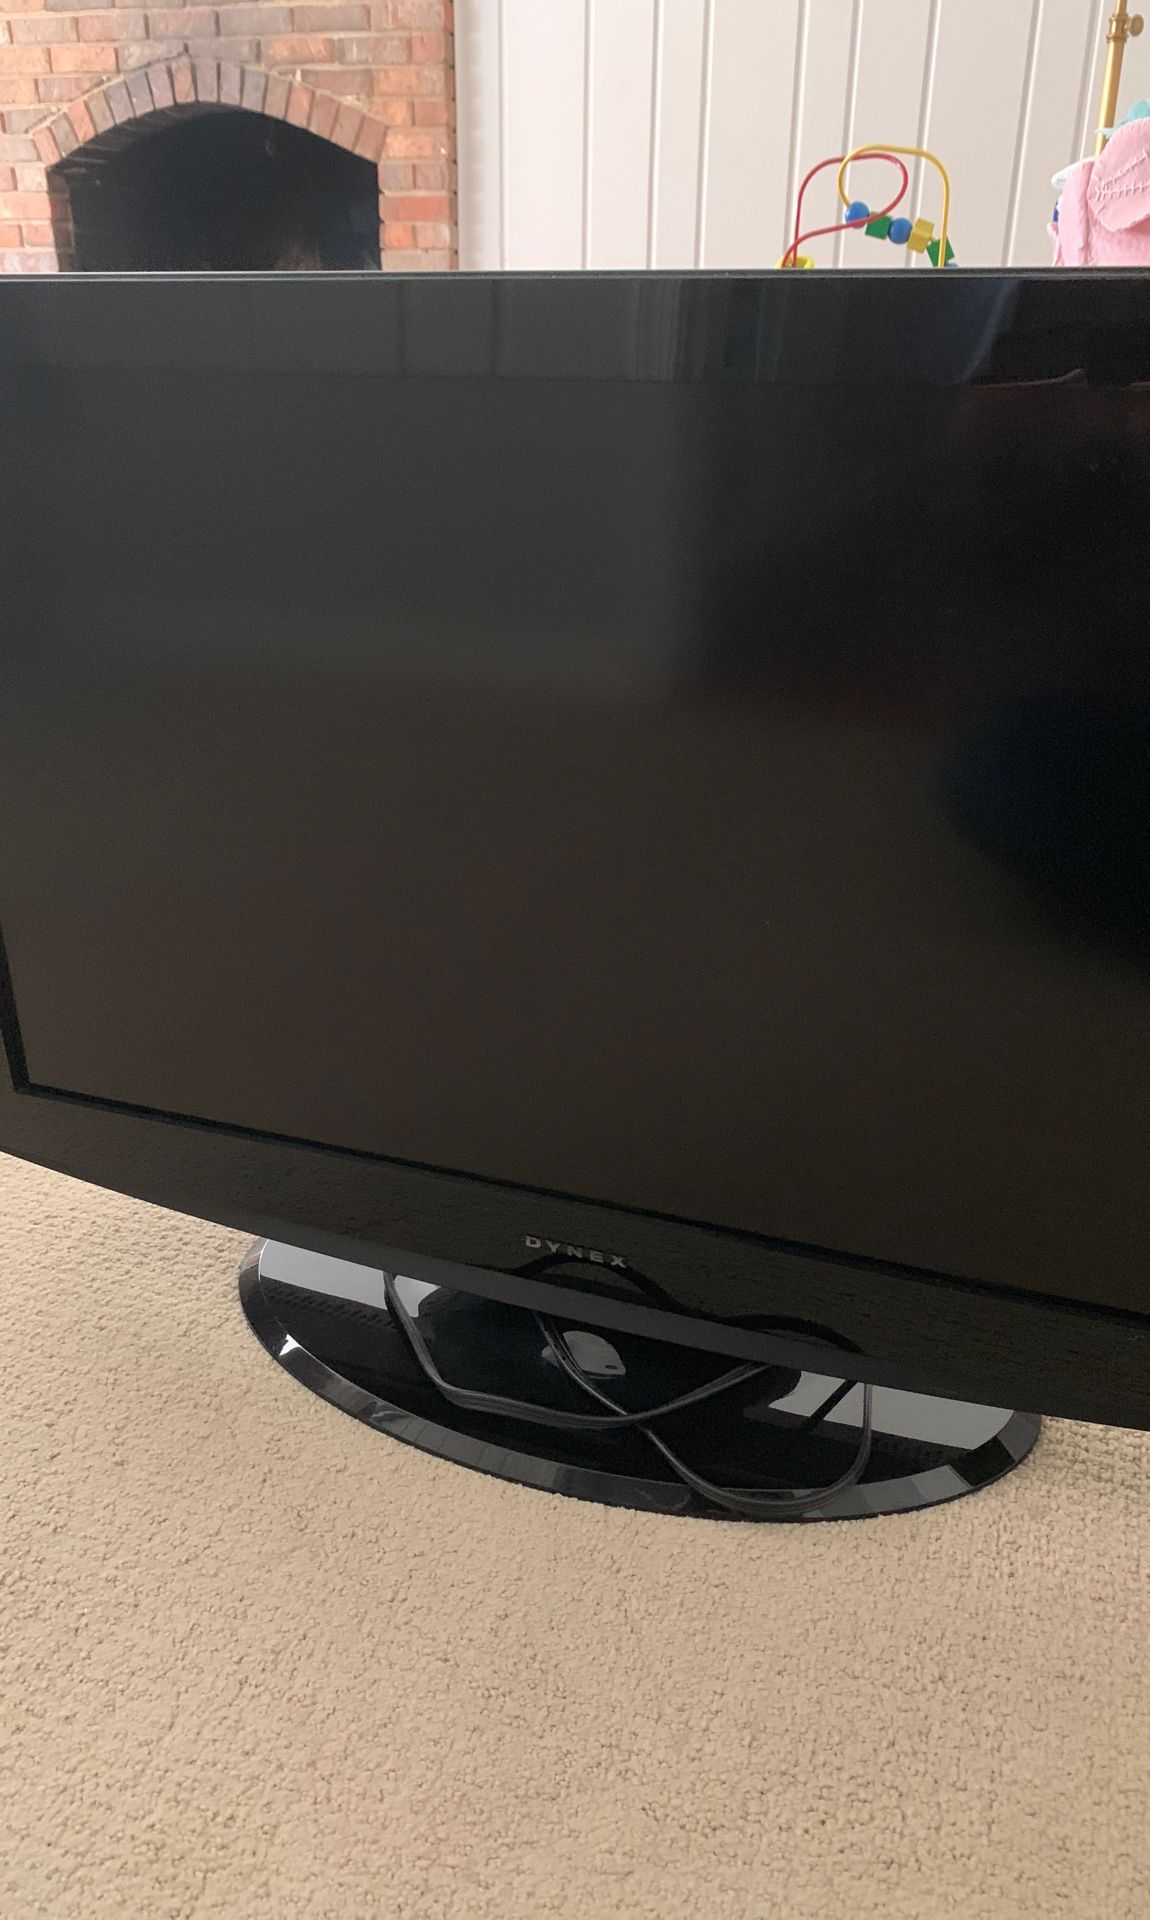 DYNEX 32” LCD TV MODEL DX-L321-10A